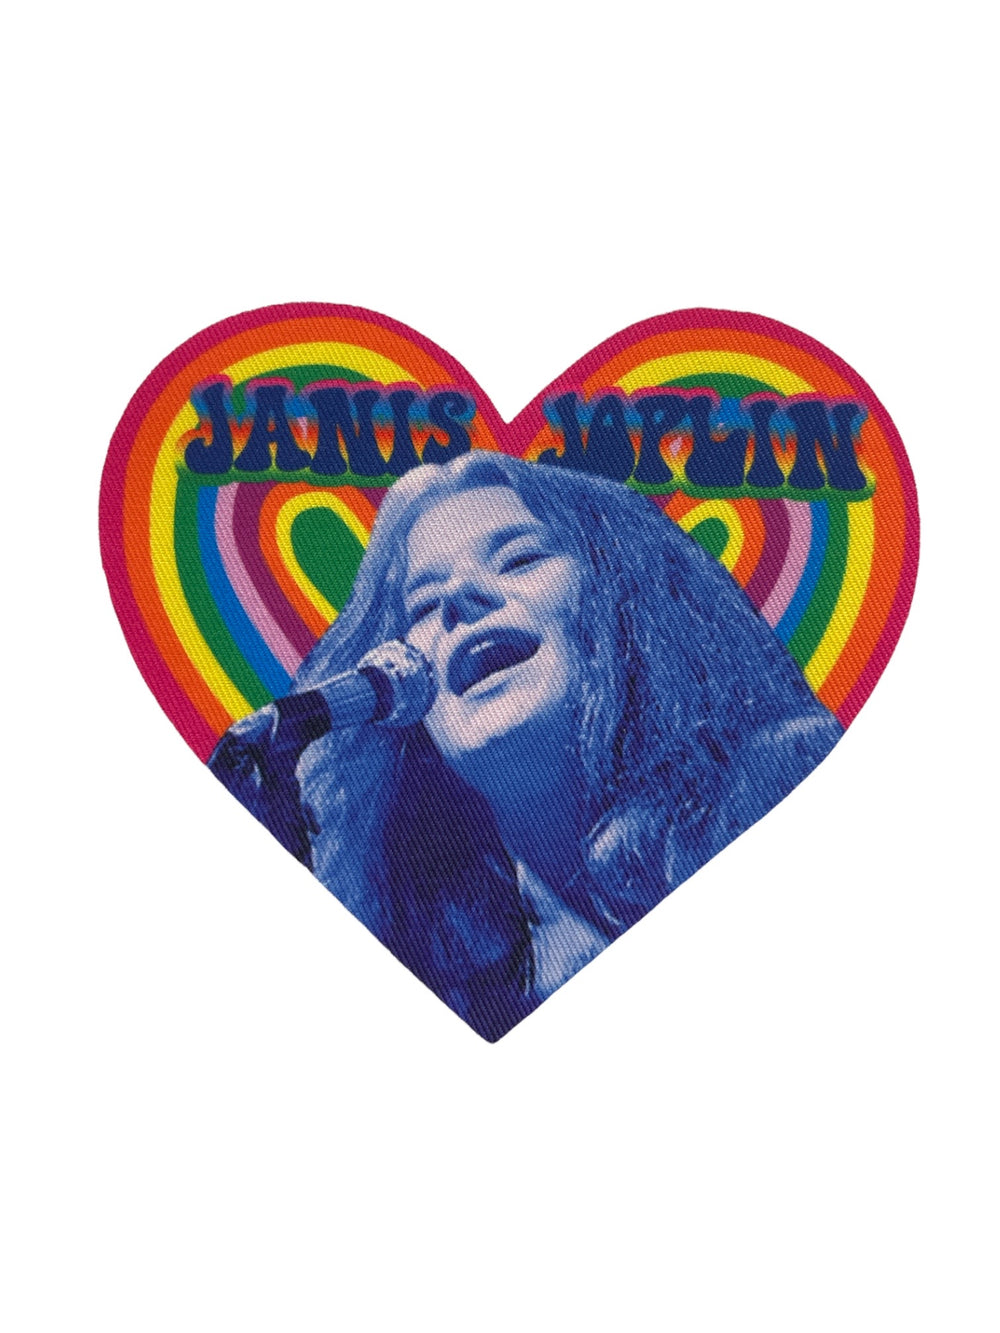 Janis Joplin Rainbow Heart Official Woven Patch Brand New